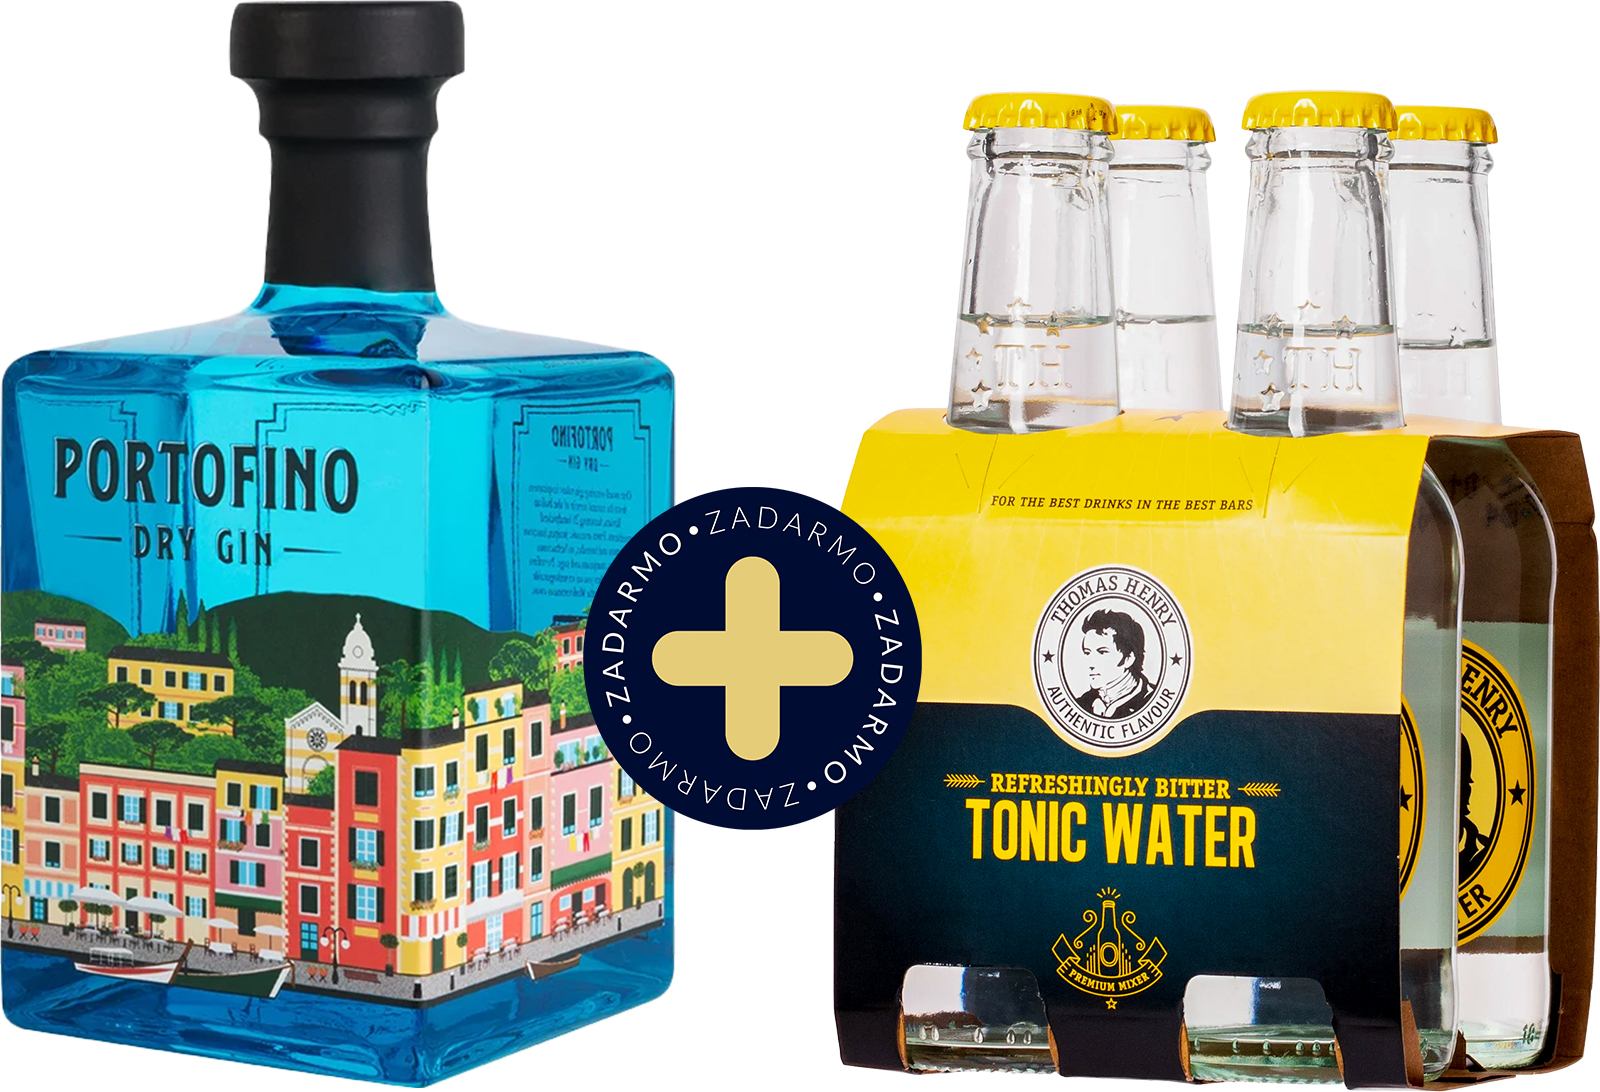 Set Portofino Dry Gin + 4Pack Thomas Henry Tonic Water Zdarma (set 1 x 0.5 l, 1 x 0.8 l)